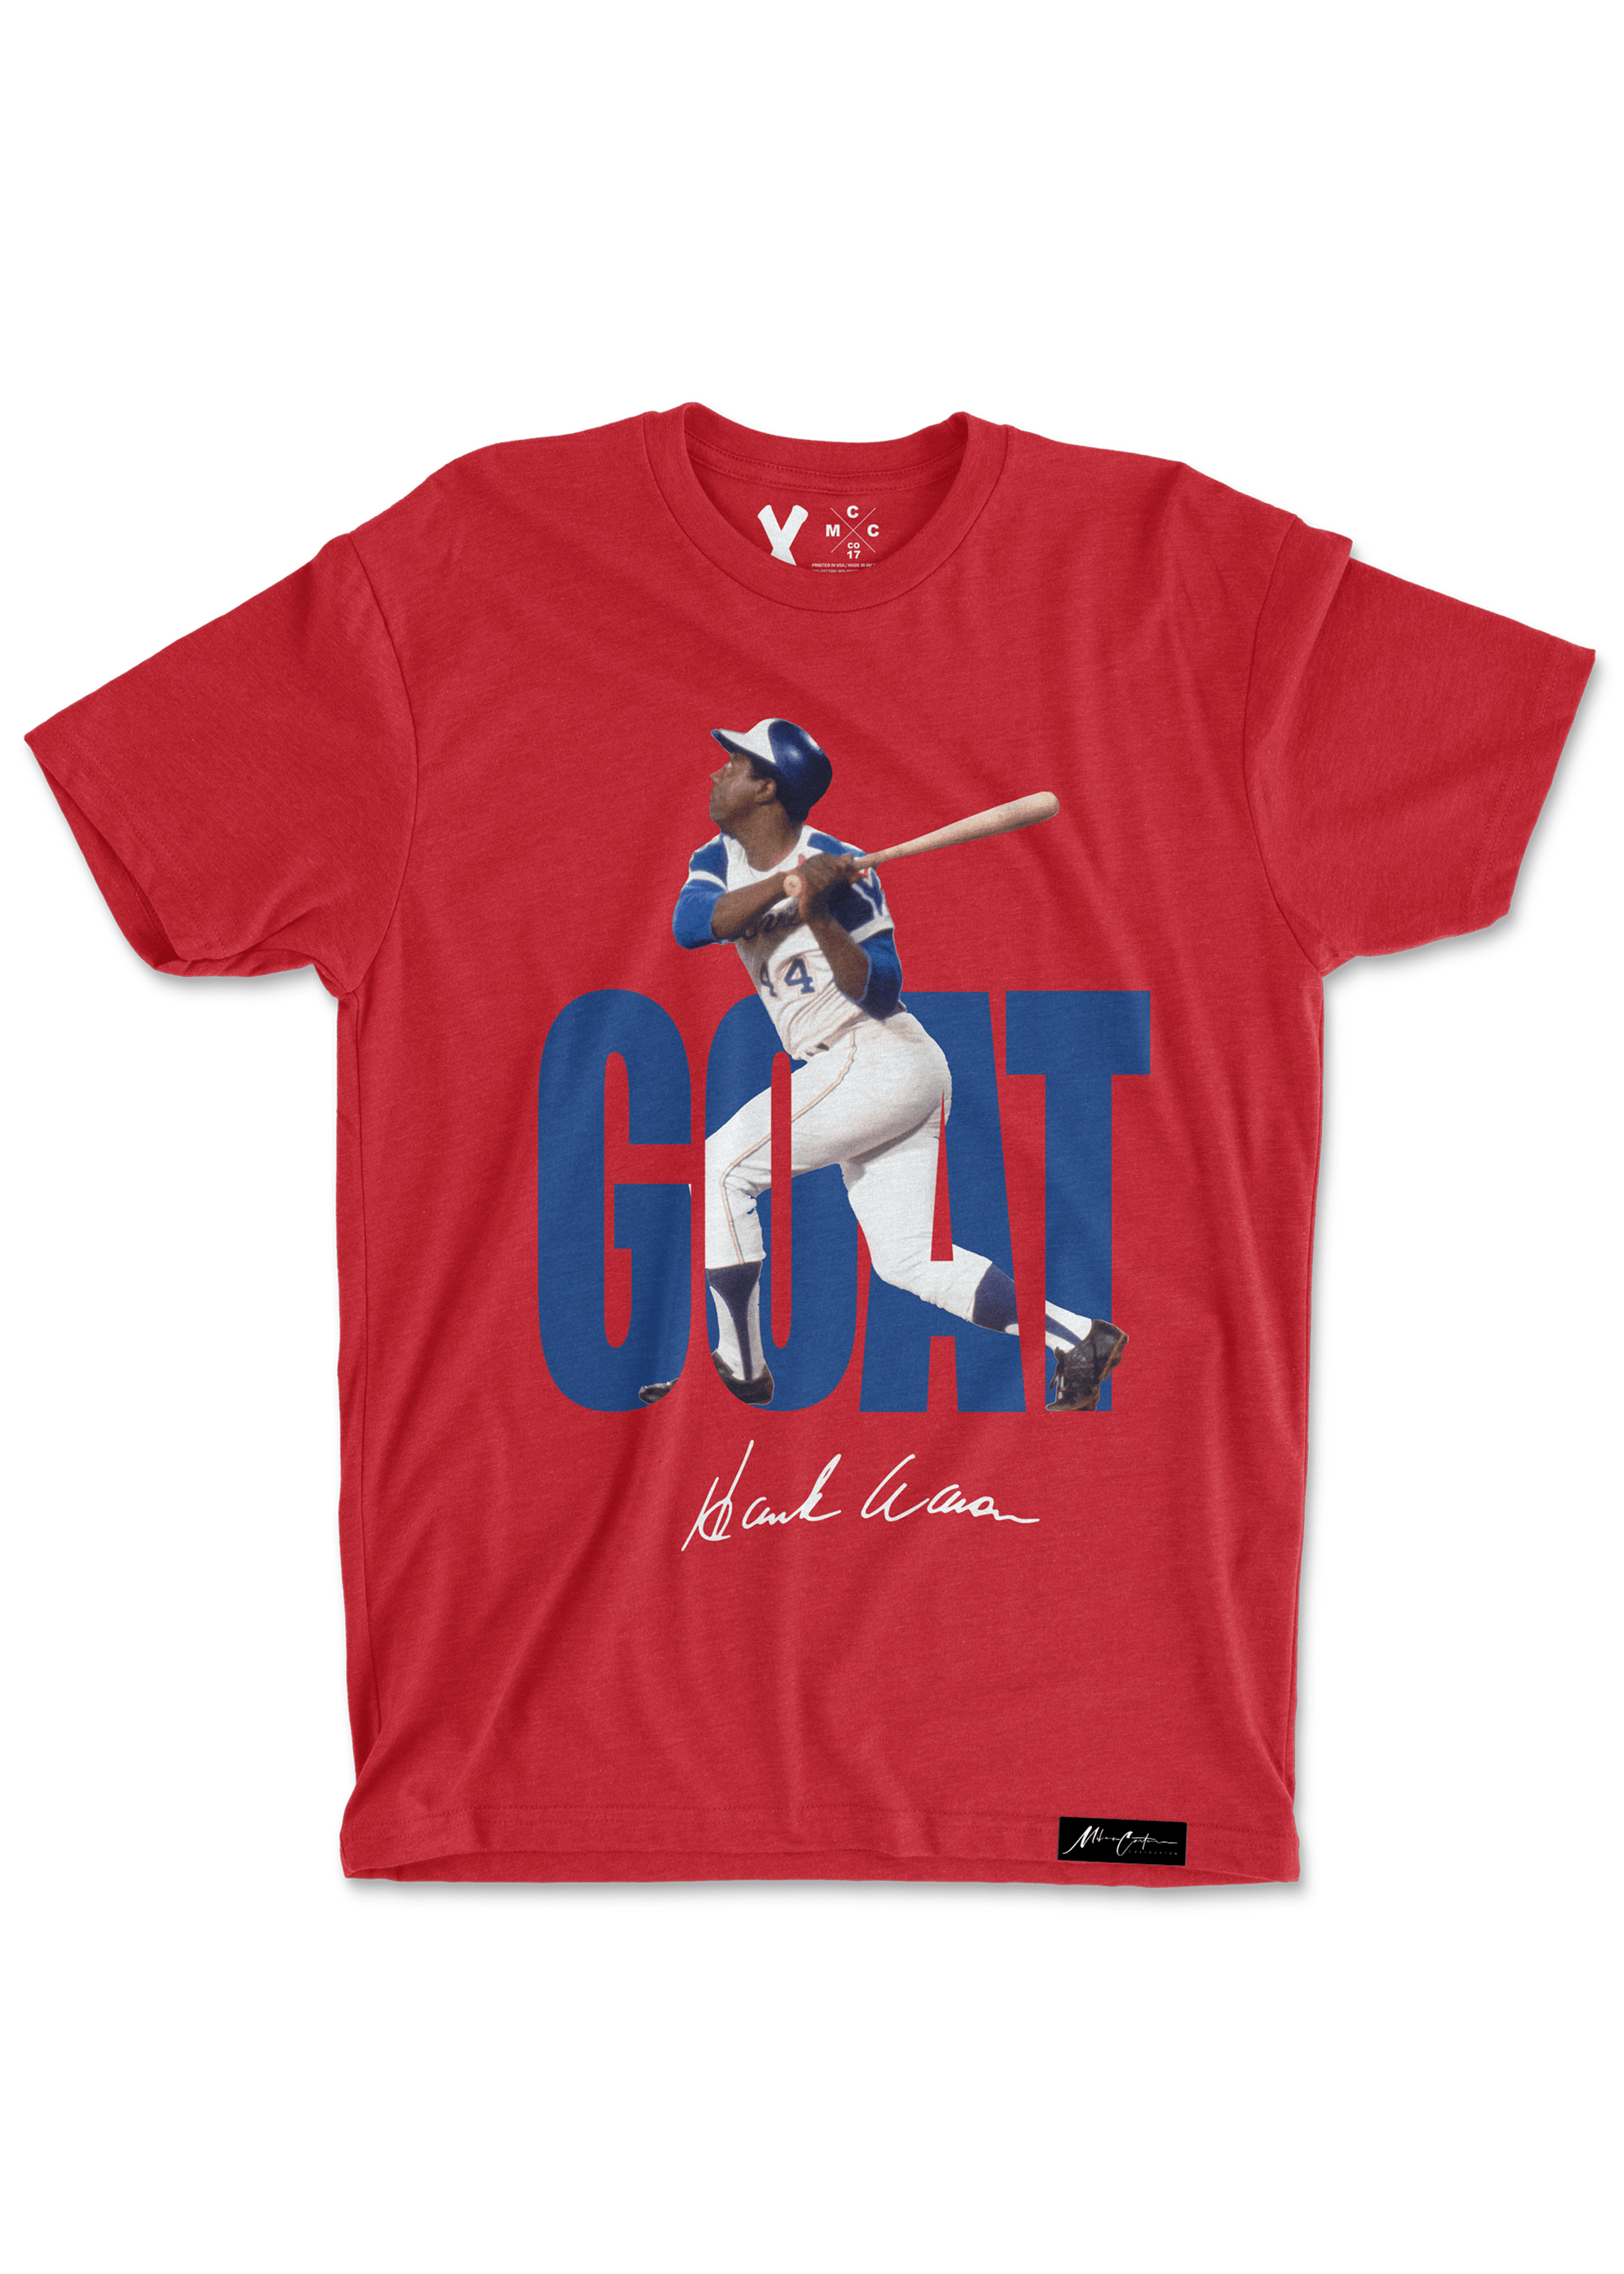 Hank Aaron T-Shirt